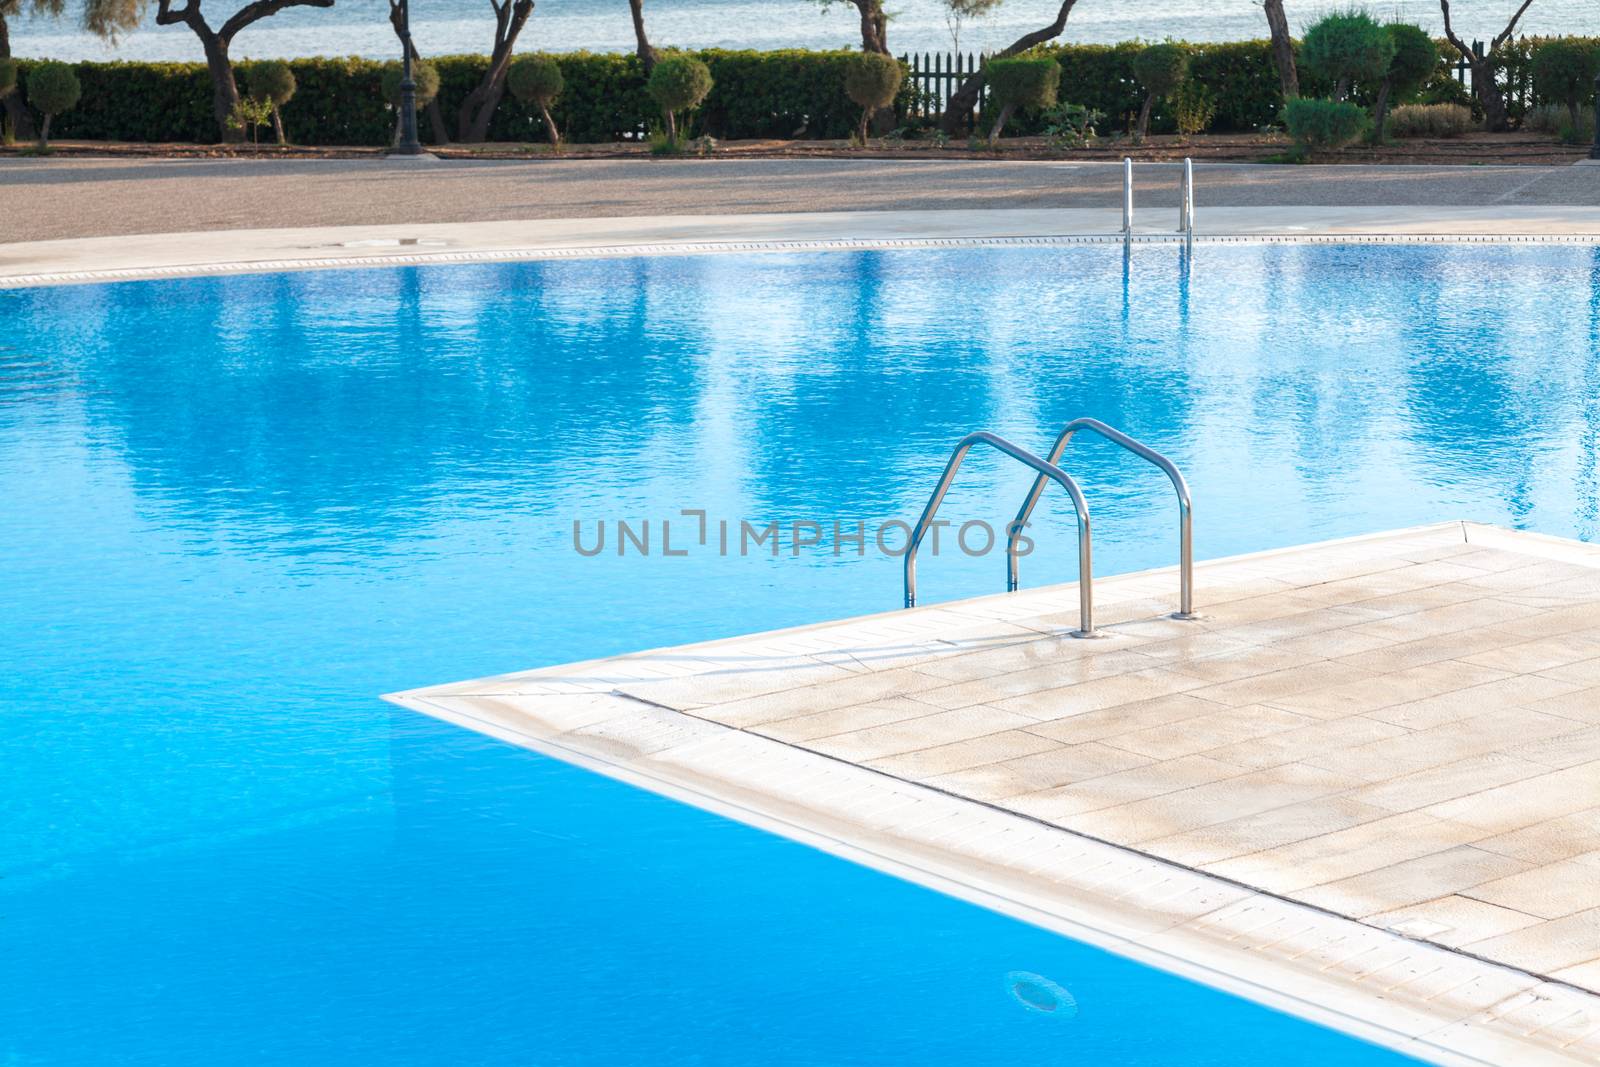 Swimming pool of luxury hotel in Alexandroupoli - Greece